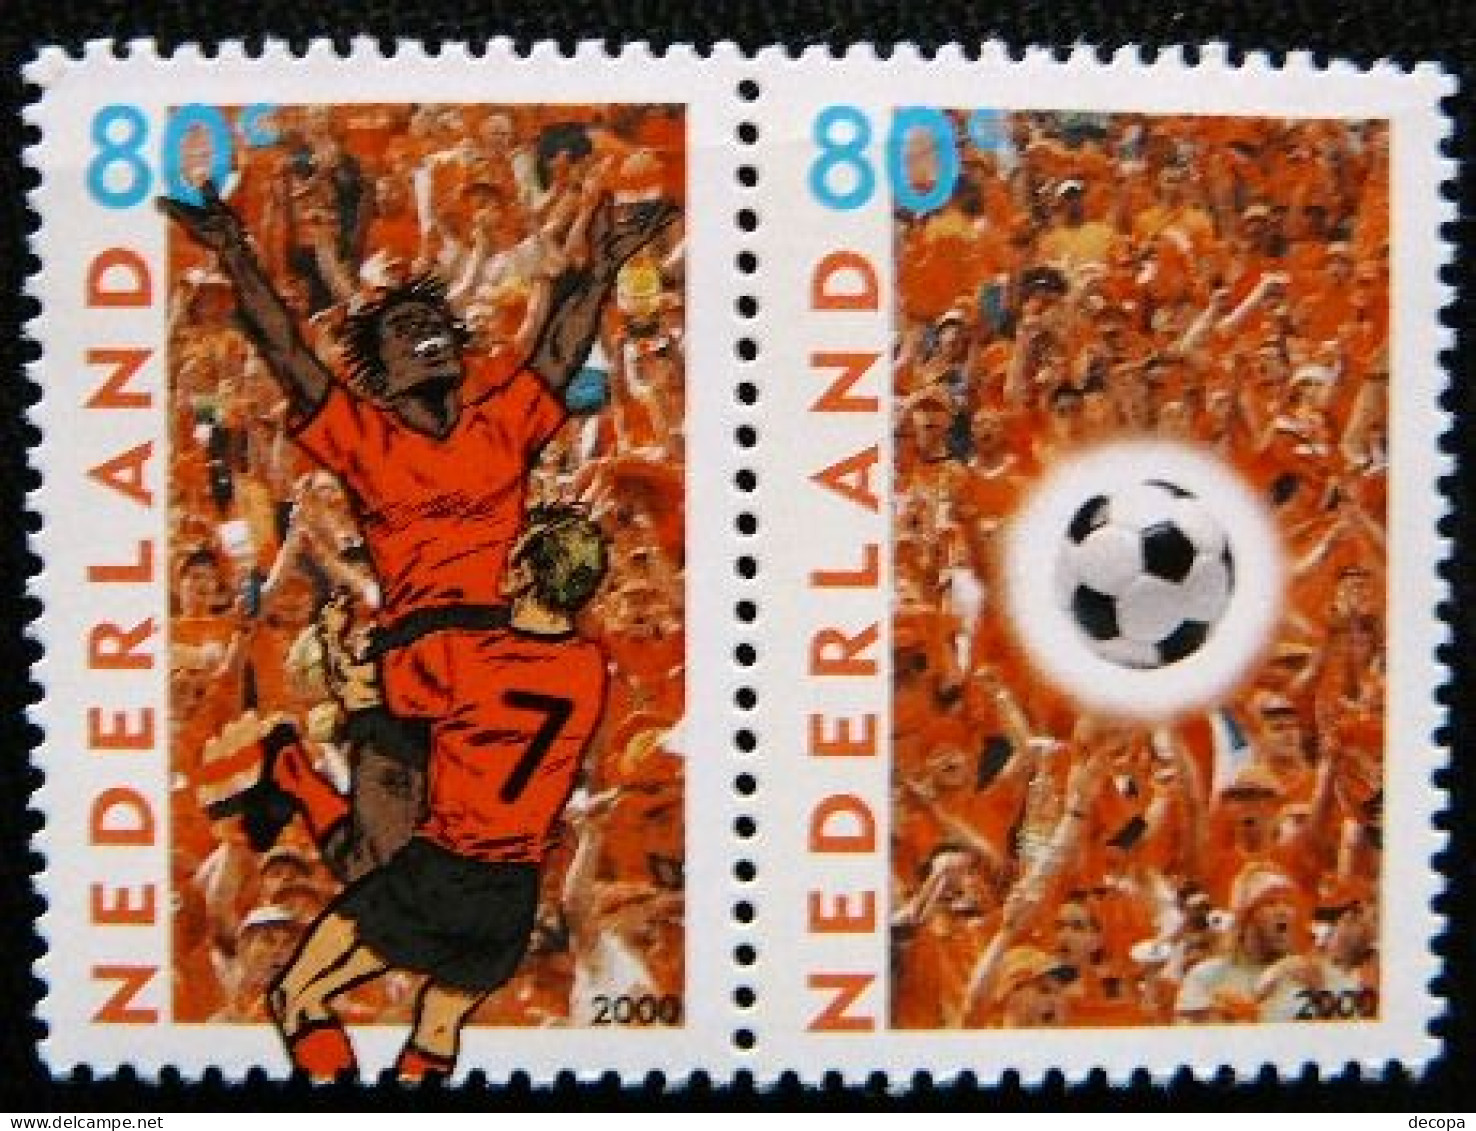 (dcbv-1358)  Netherlands  -  Pays-Bas   -   Nederland      Michel  1786-87      MNH   2003 - UEFA European Championship